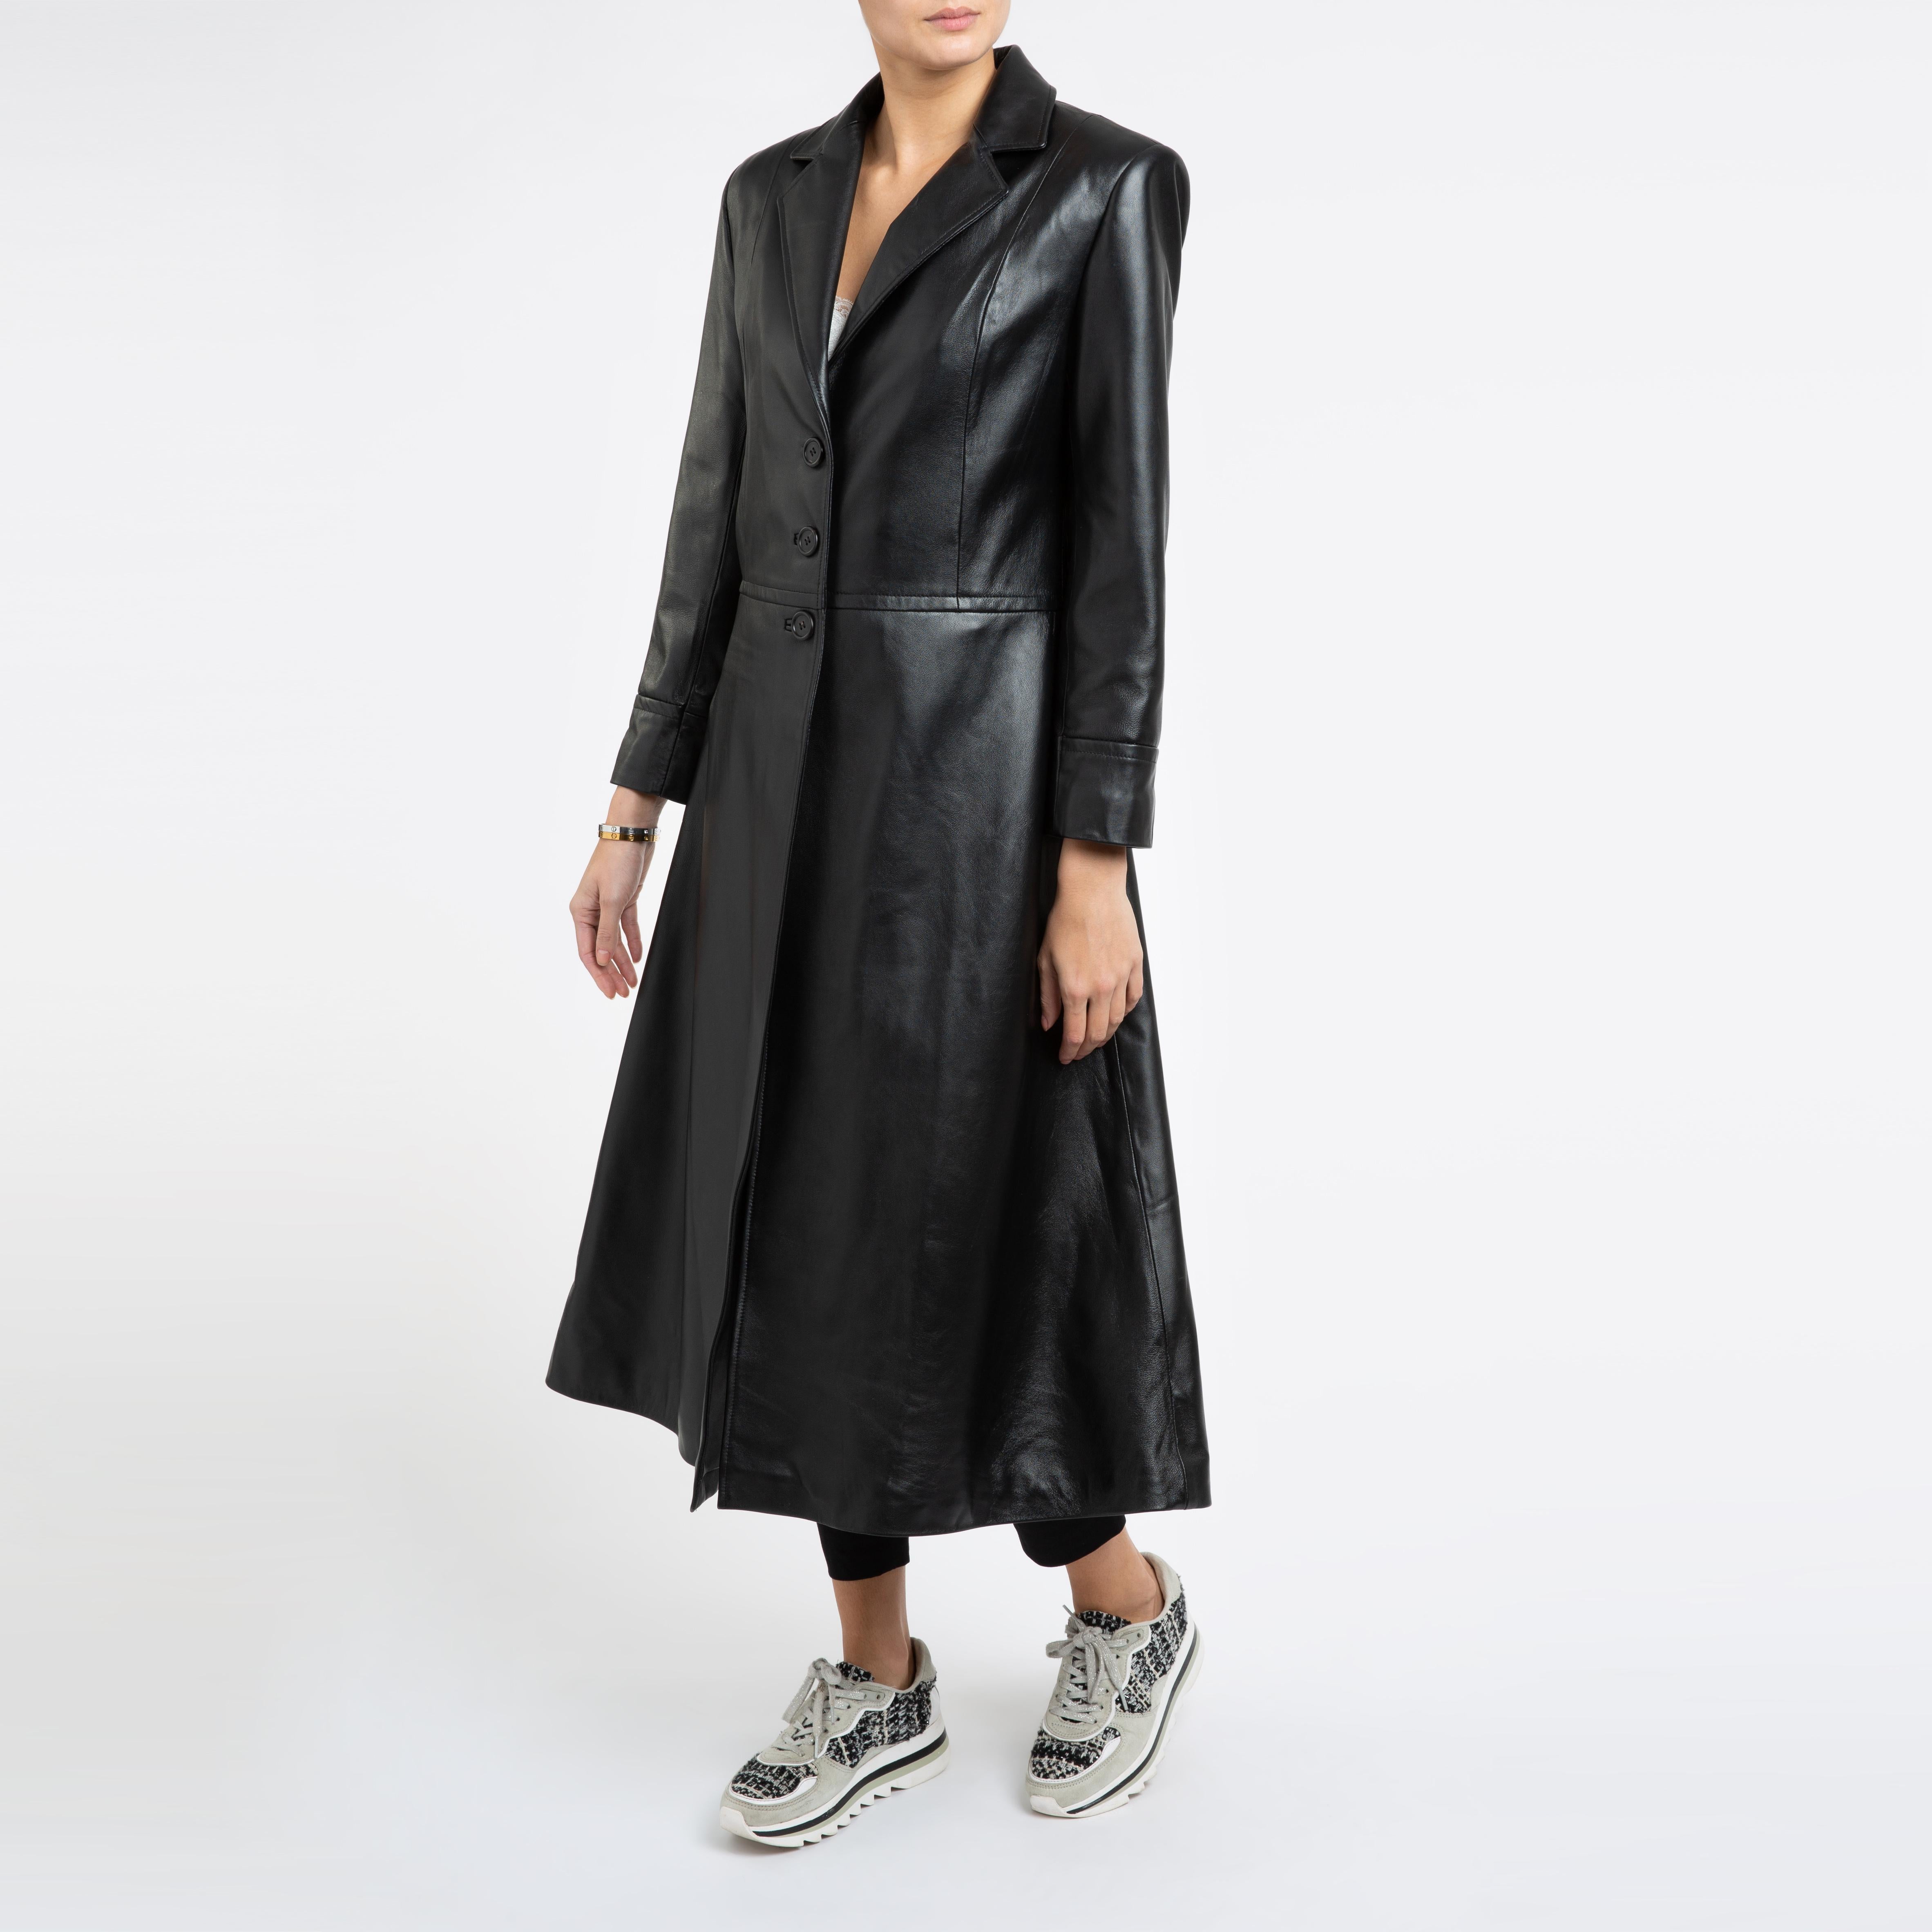 Verheyen London Oversize 70's Leather Trench Coat in Black - Size uk 12 For Sale 4